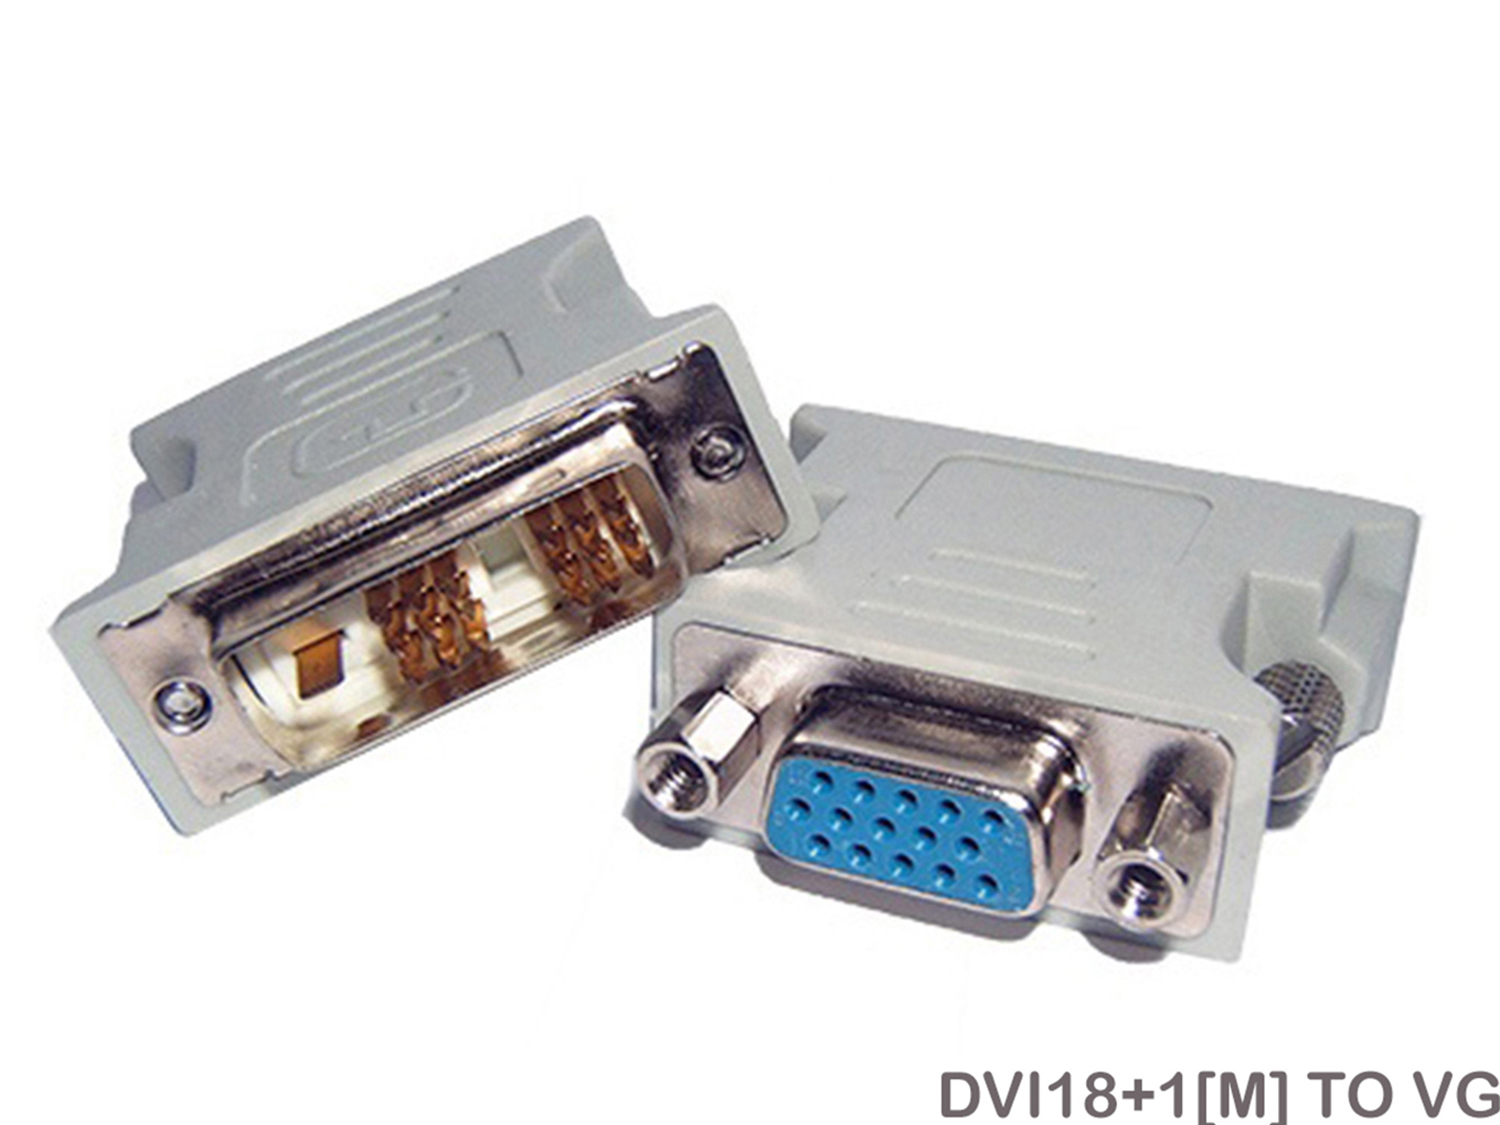 Adaptor VGA to DVI 18+1